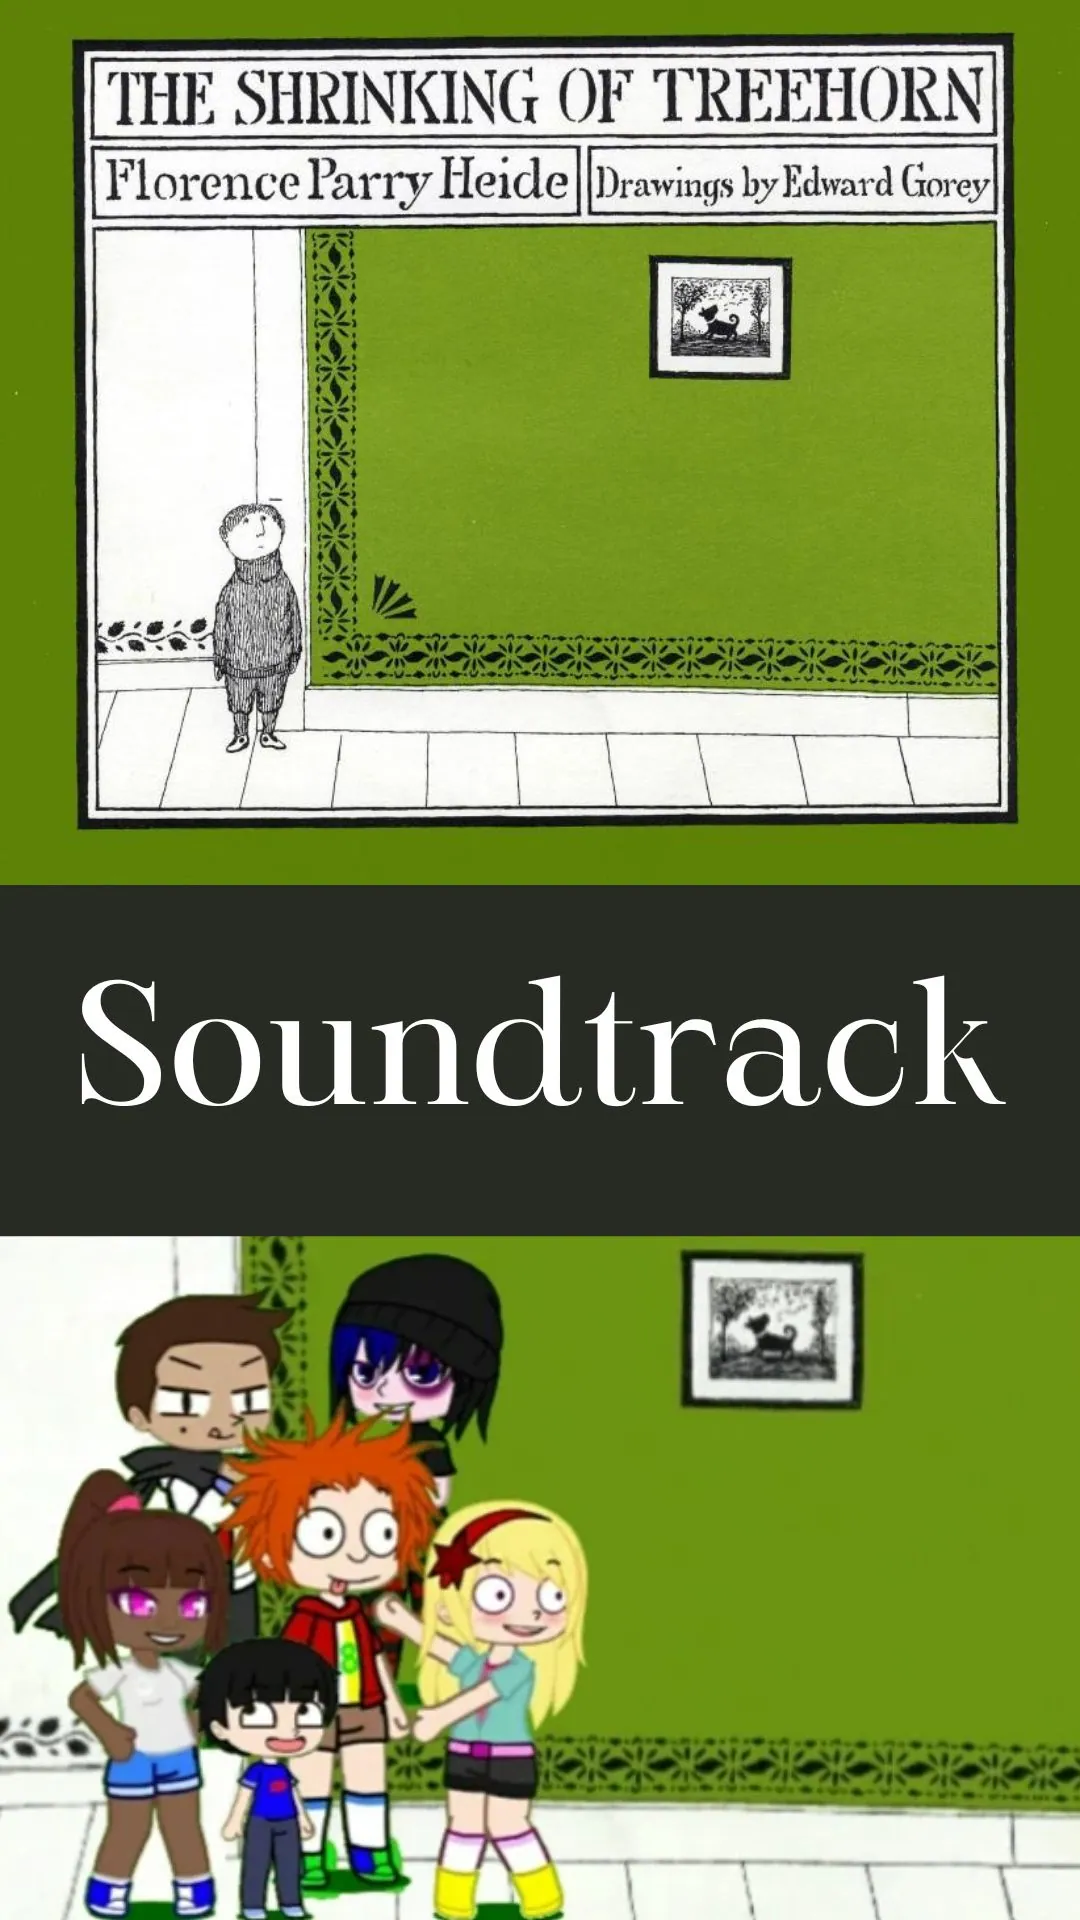 The Shrinking of Treehorn Soundtrack